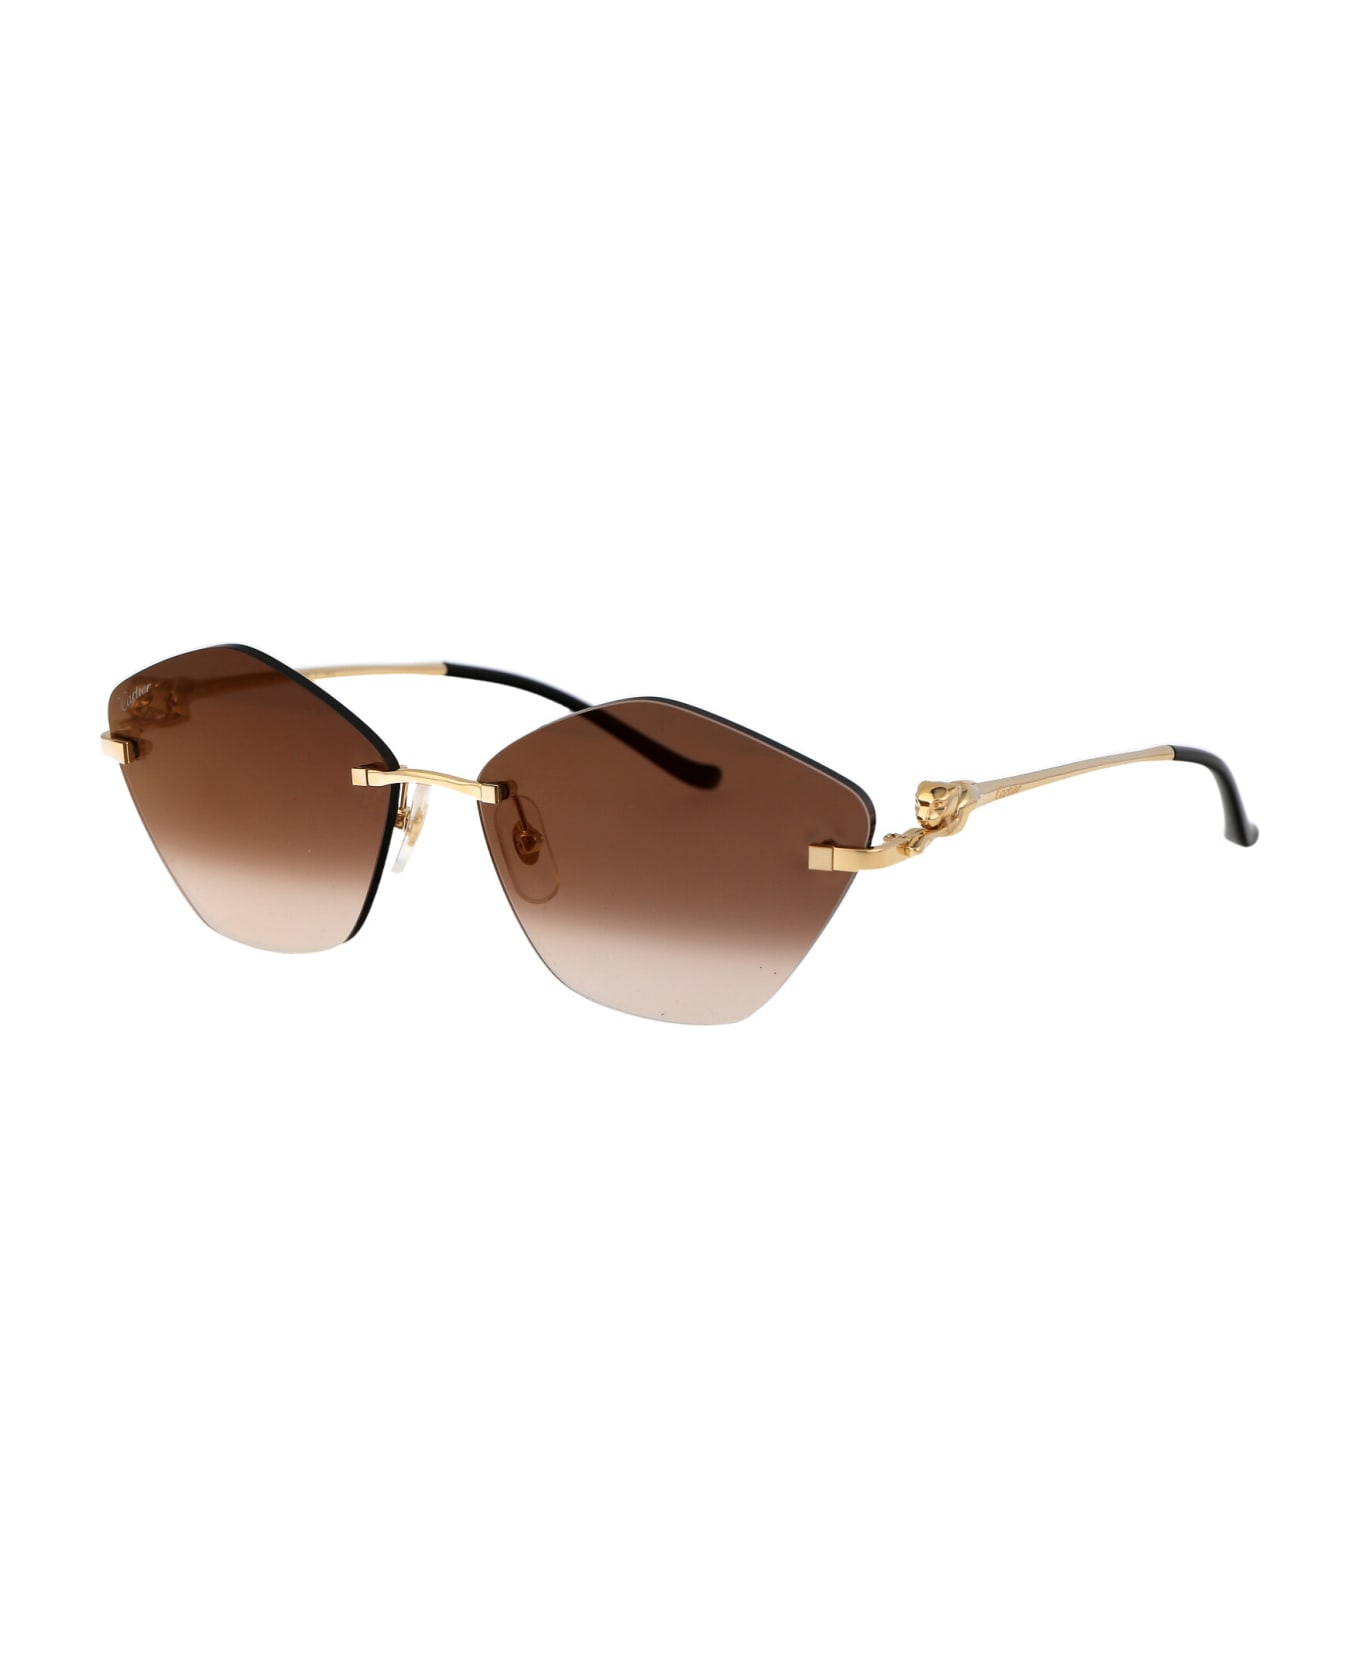 Cartier Eyewear Ct0429s Sunglasses - 002 GOLD GOLD BROWN サングラス